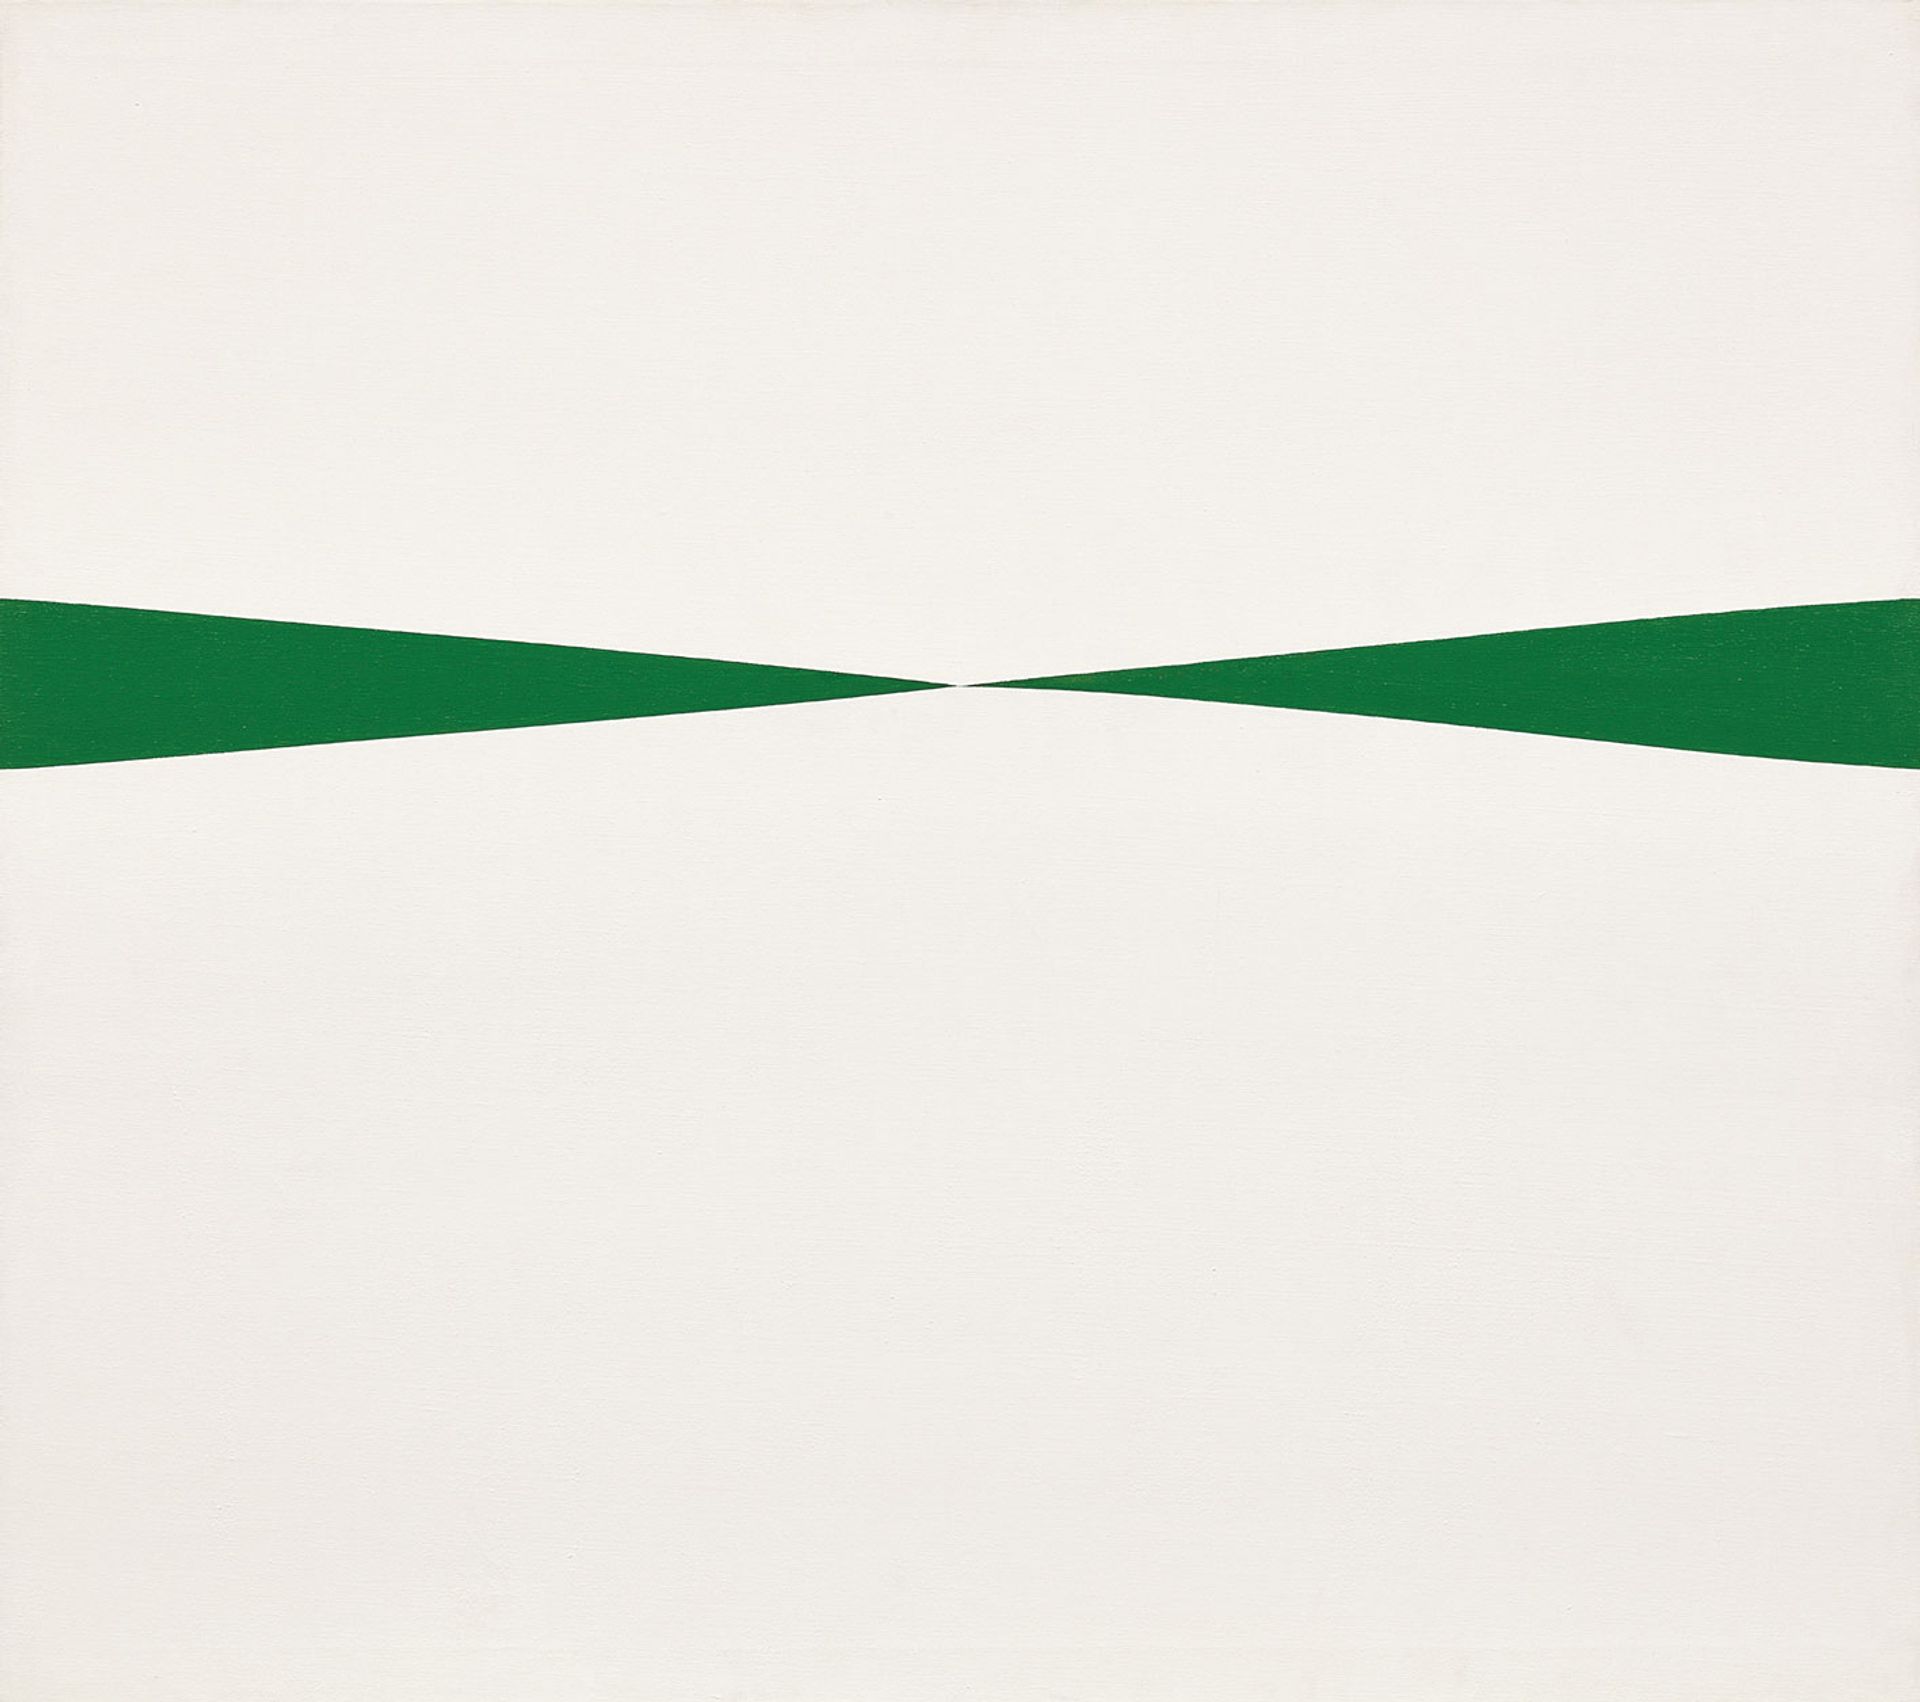 Carmen Herrera’s Blanco y Verde (1966) goes under the hammer at Phillips Courtesy of Phillips